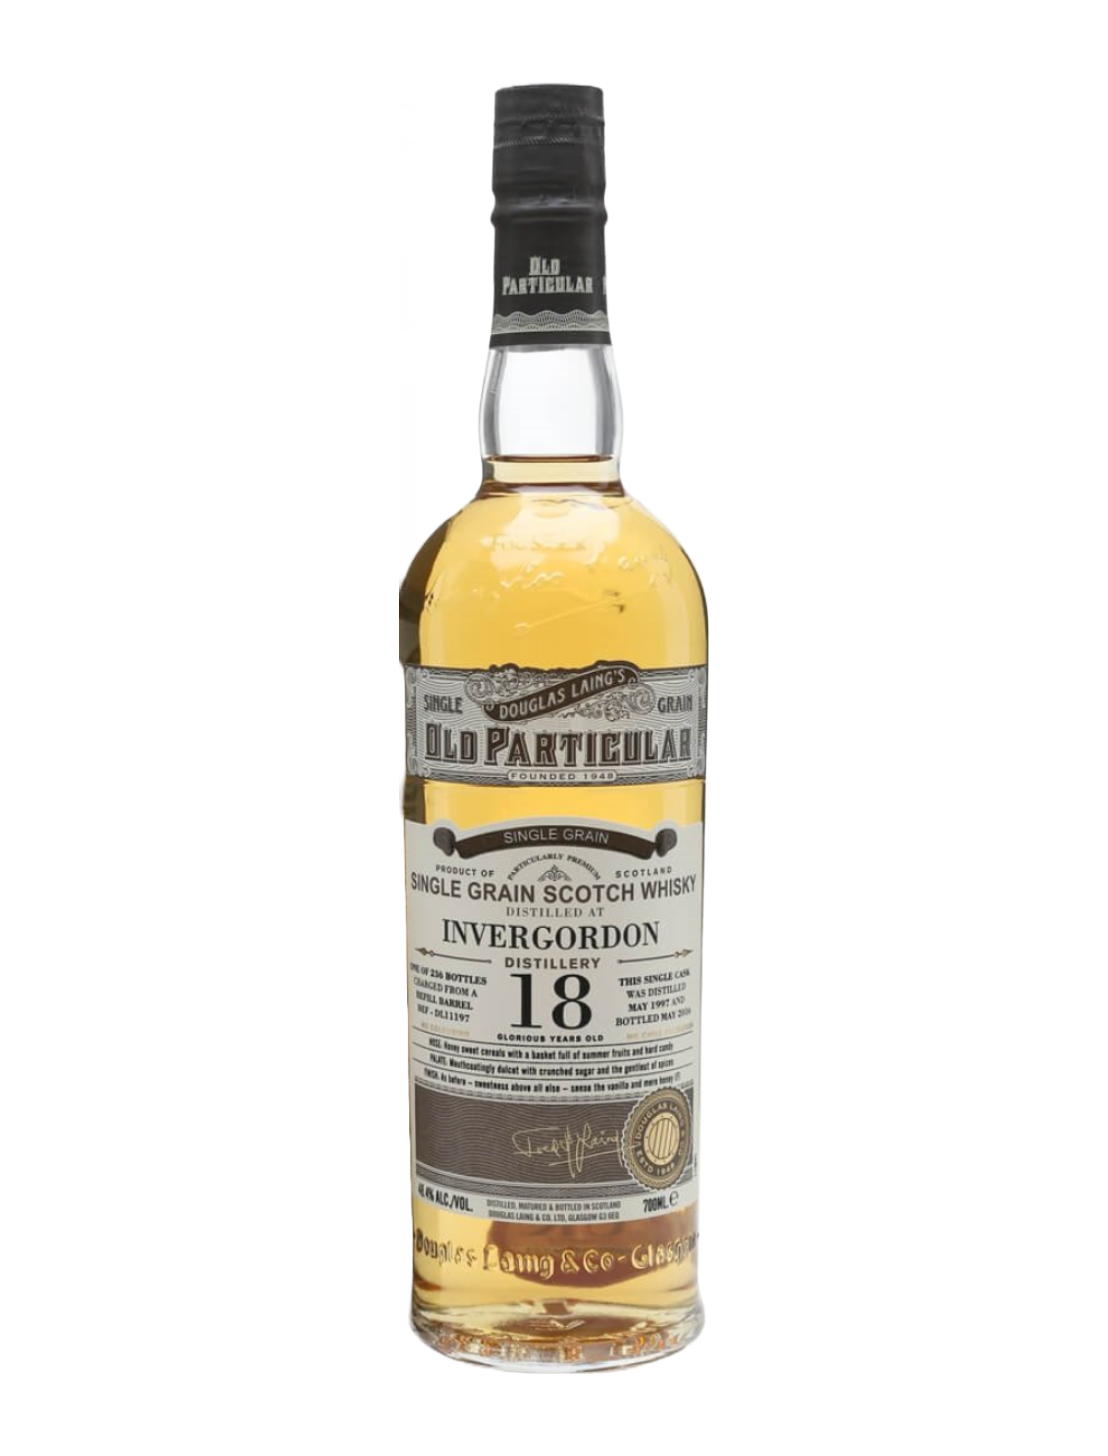 An elegant bottle of Invergordon 18 Year Highland Single Grain Whisky in front of a plain white background